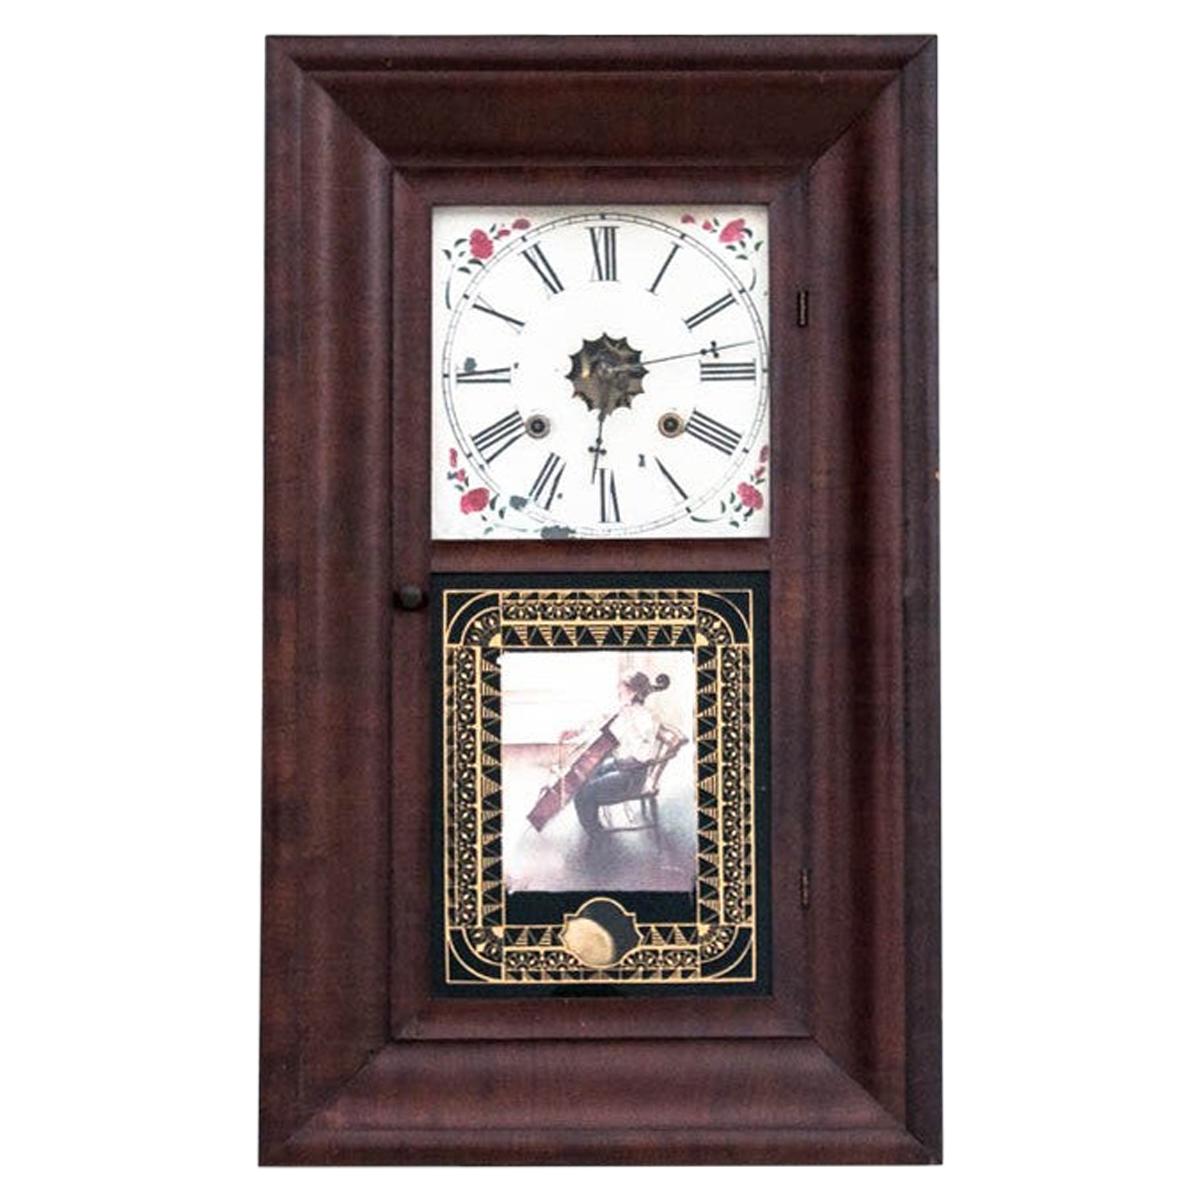 Waterbury Wall Clock, USA, Mid 19th Century